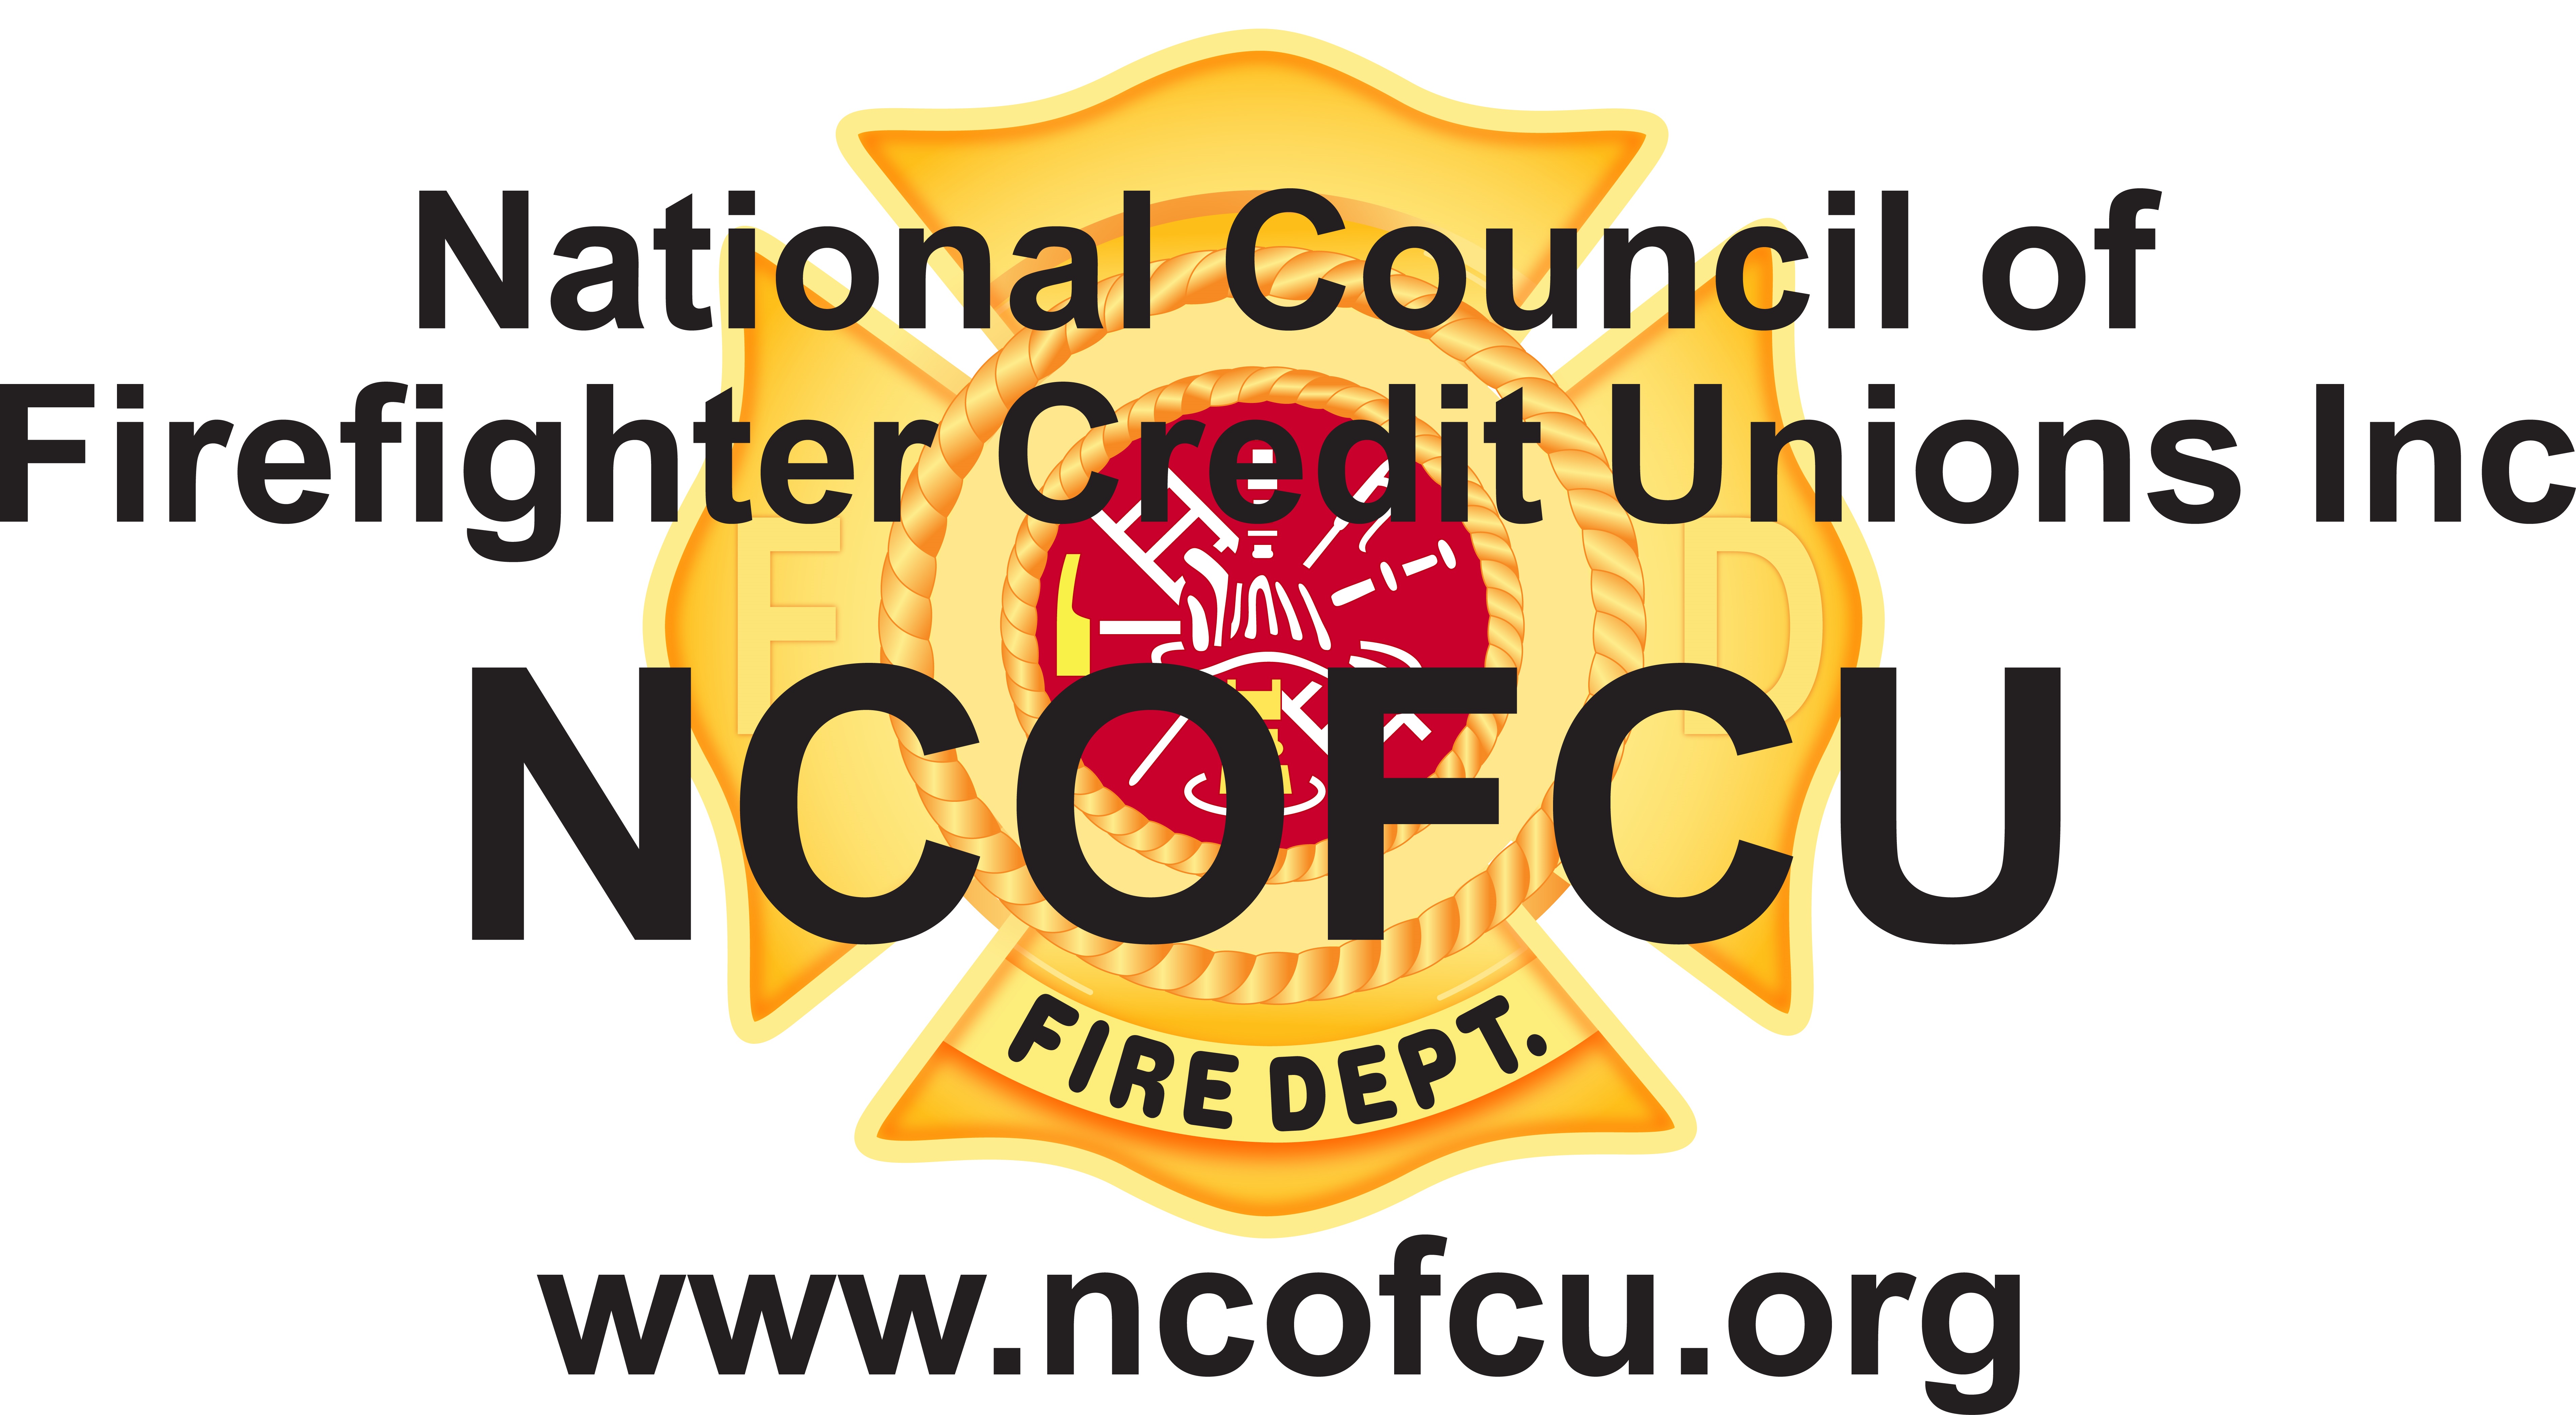 www.ncofcu.org